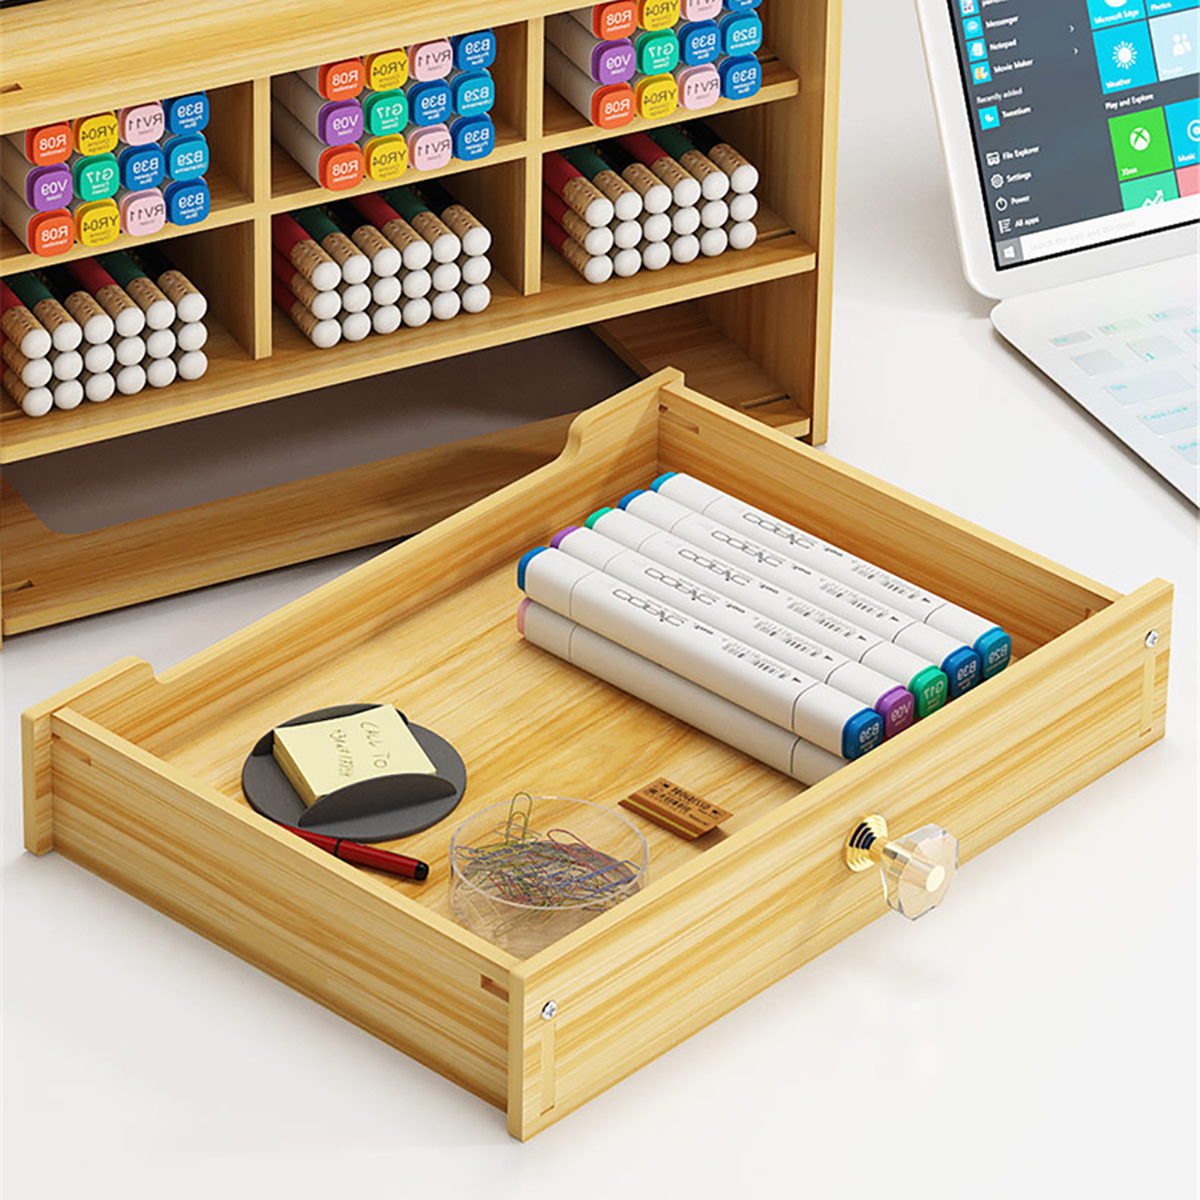 Pen-Holder-Wooden-Pencil-Storage-Holder-Study-Home-Office-Case-Rack-Drawer-1829251-7